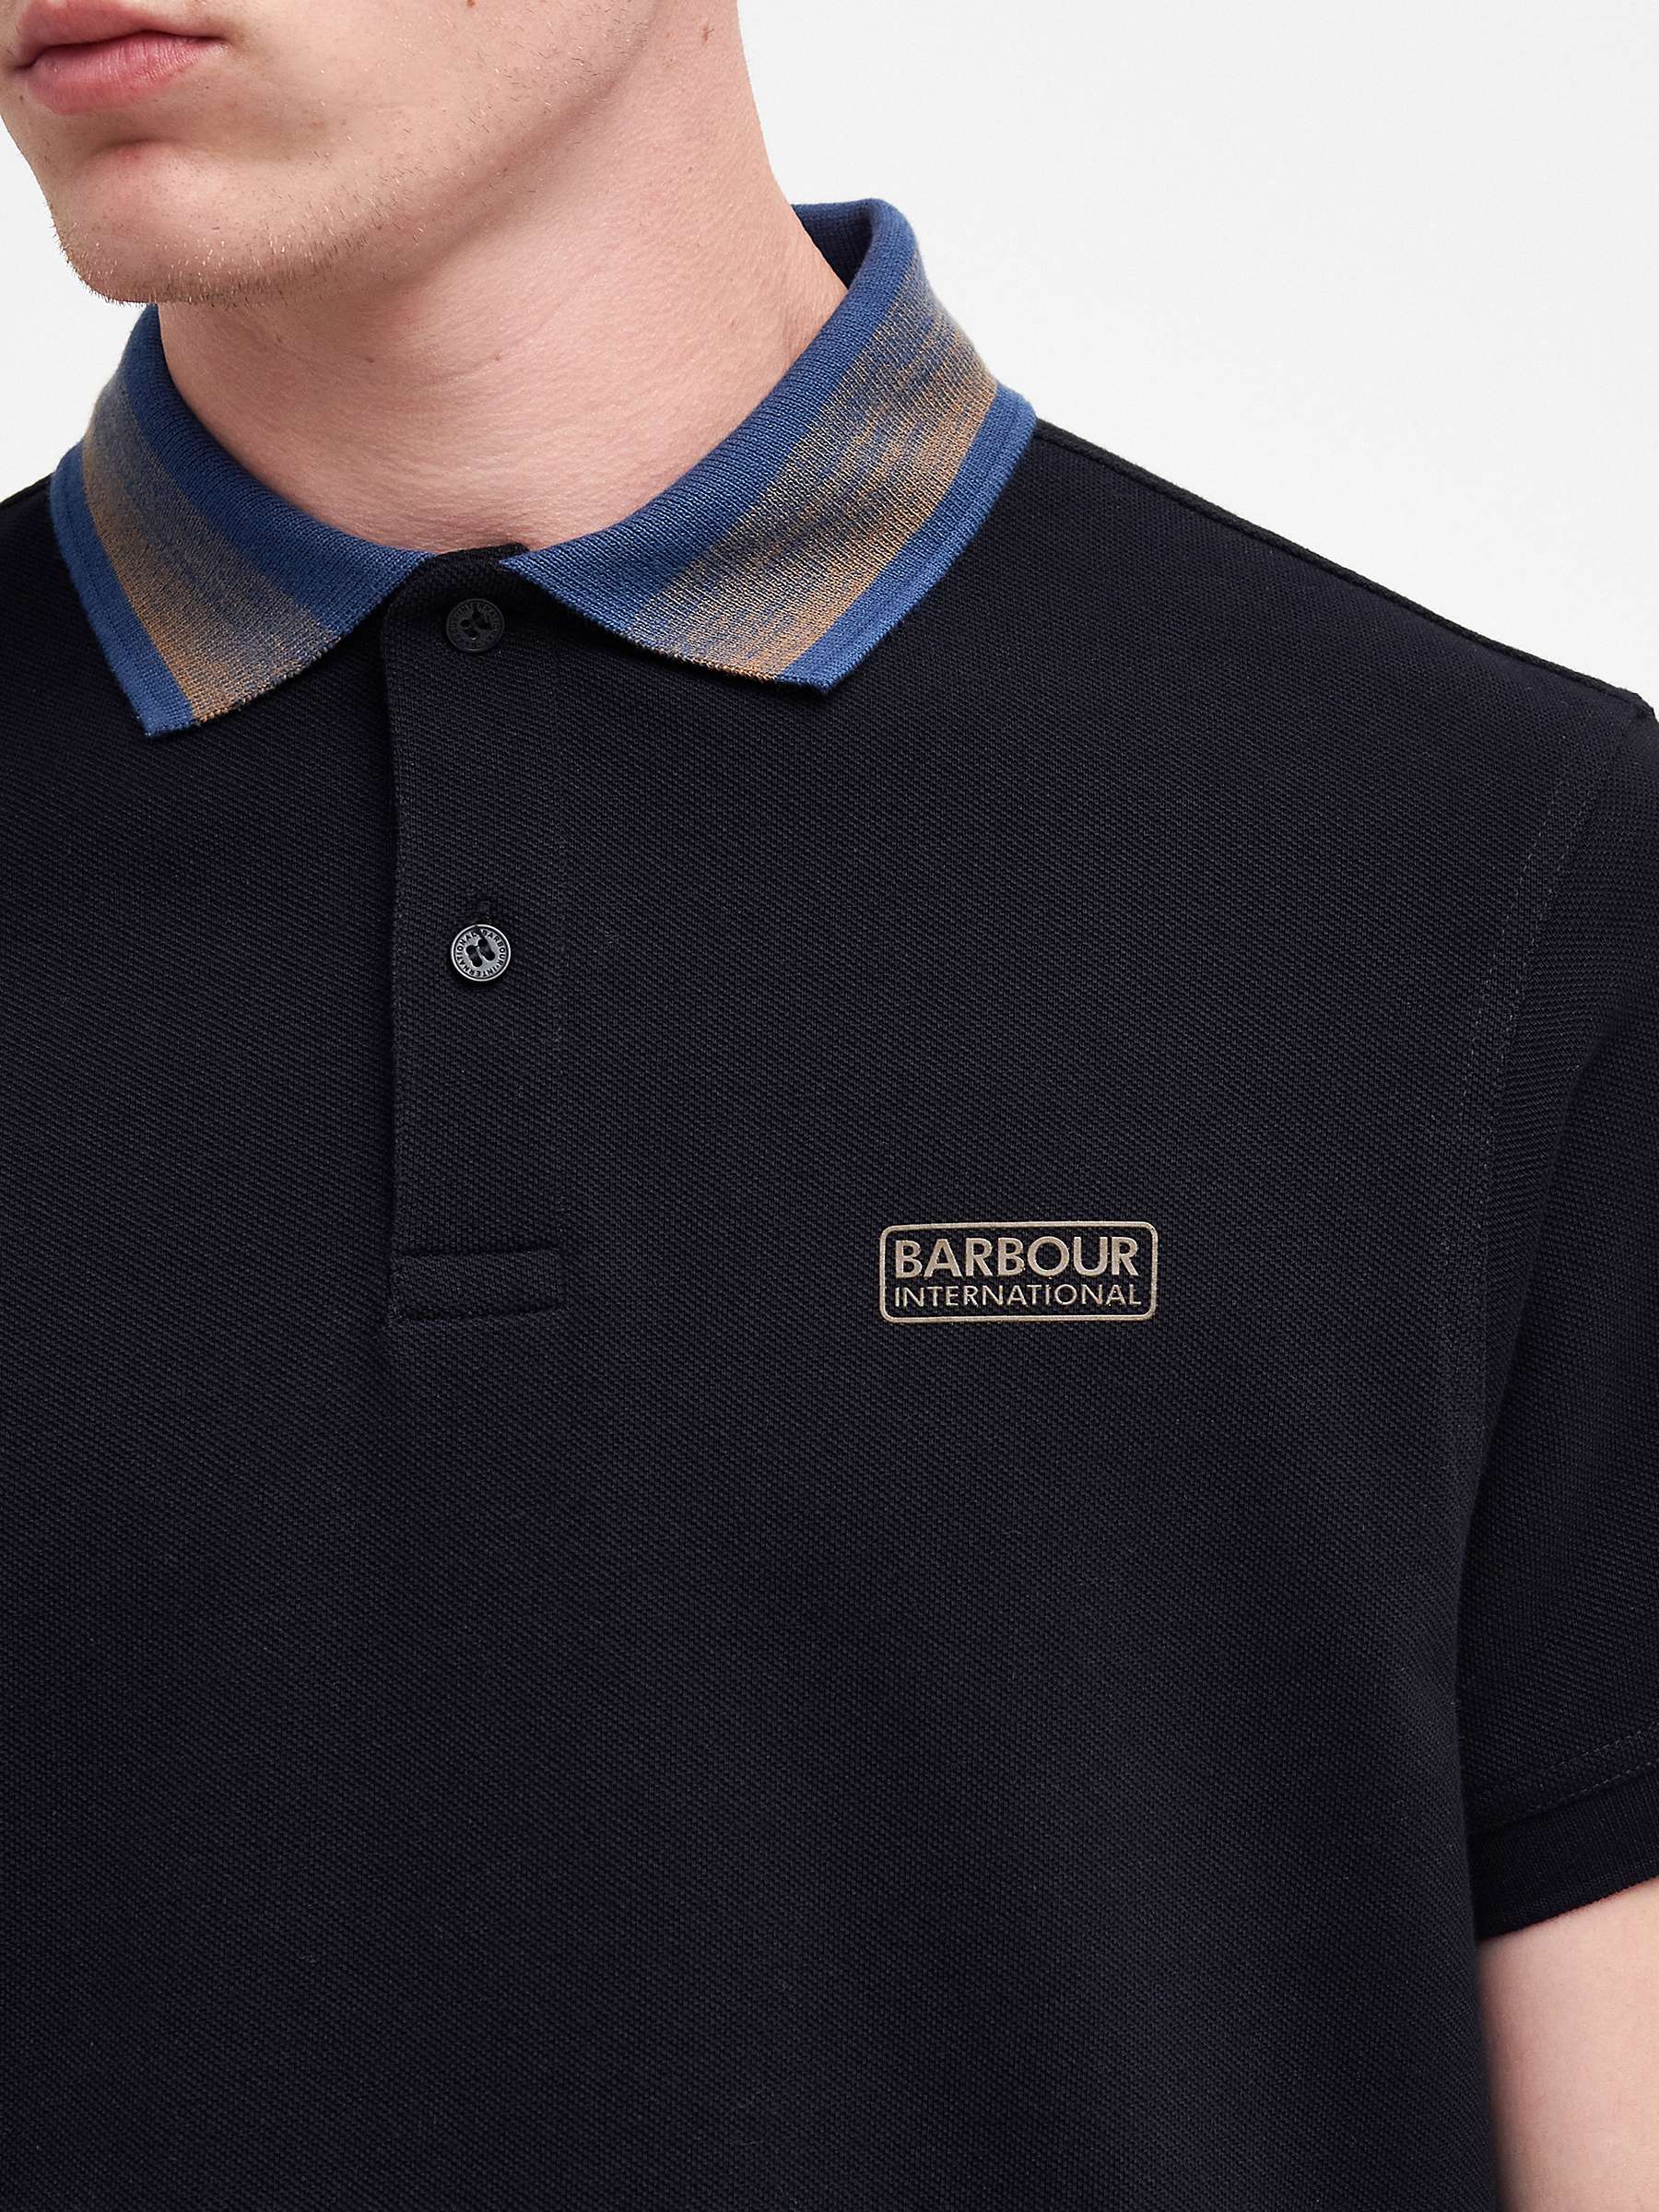 Buy Barbour International Gourley Polo Shirt, Black Online at johnlewis.com